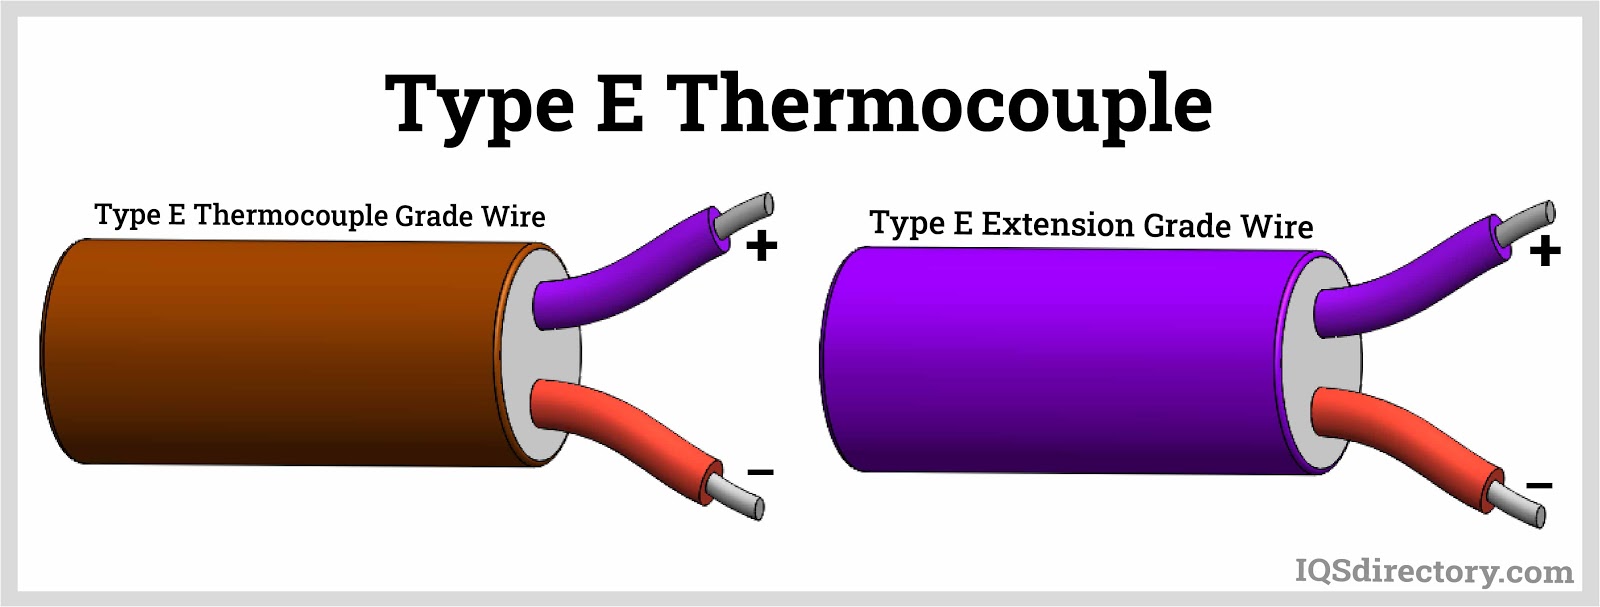 Type E Thermocouple